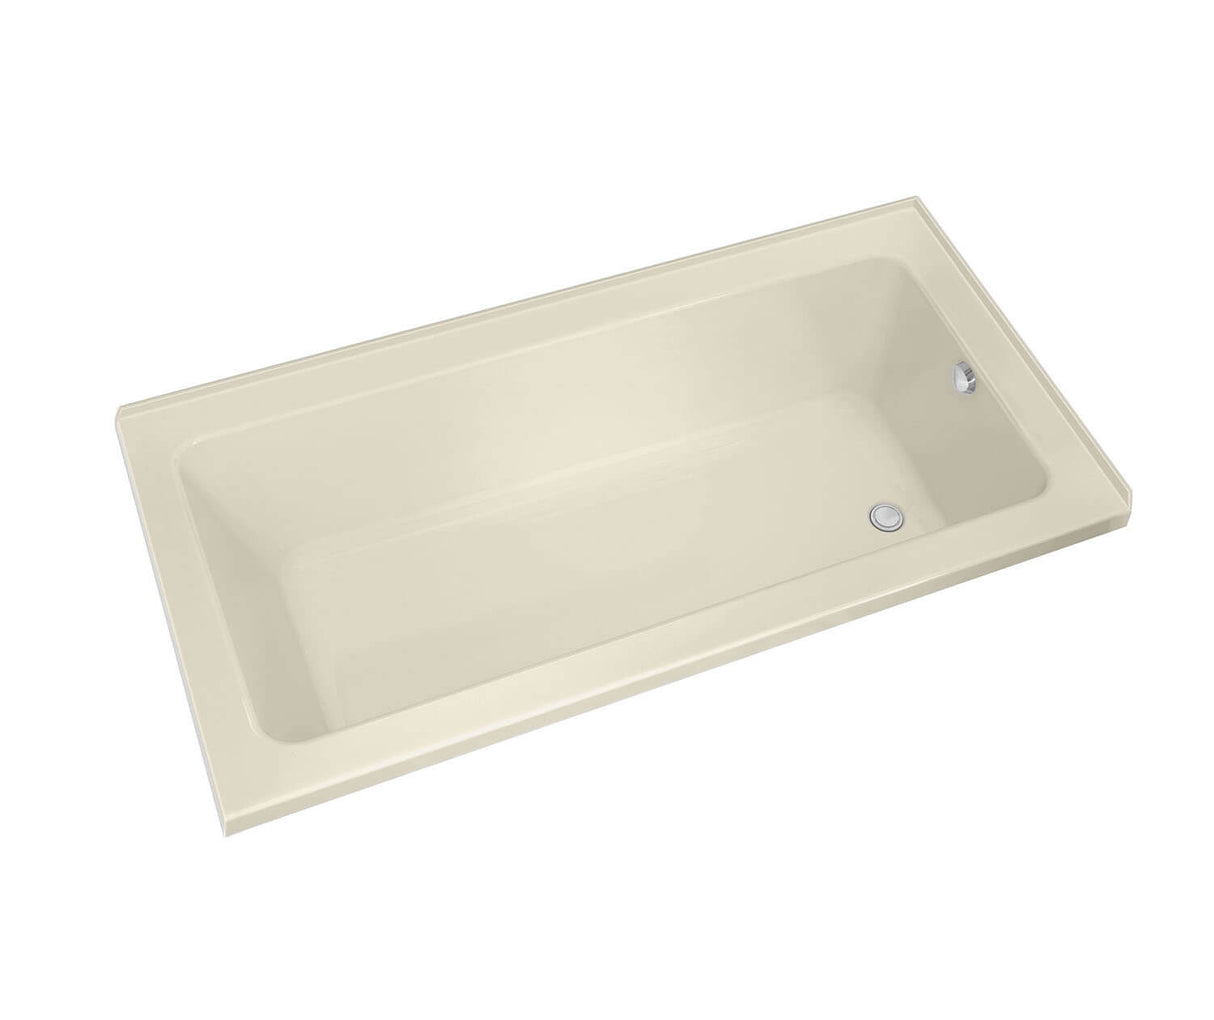 MAAX 106209-R-003-004 Pose 6636 IF Acrylic Corner Right Right-Hand Drain Whirlpool Bathtub in Bone